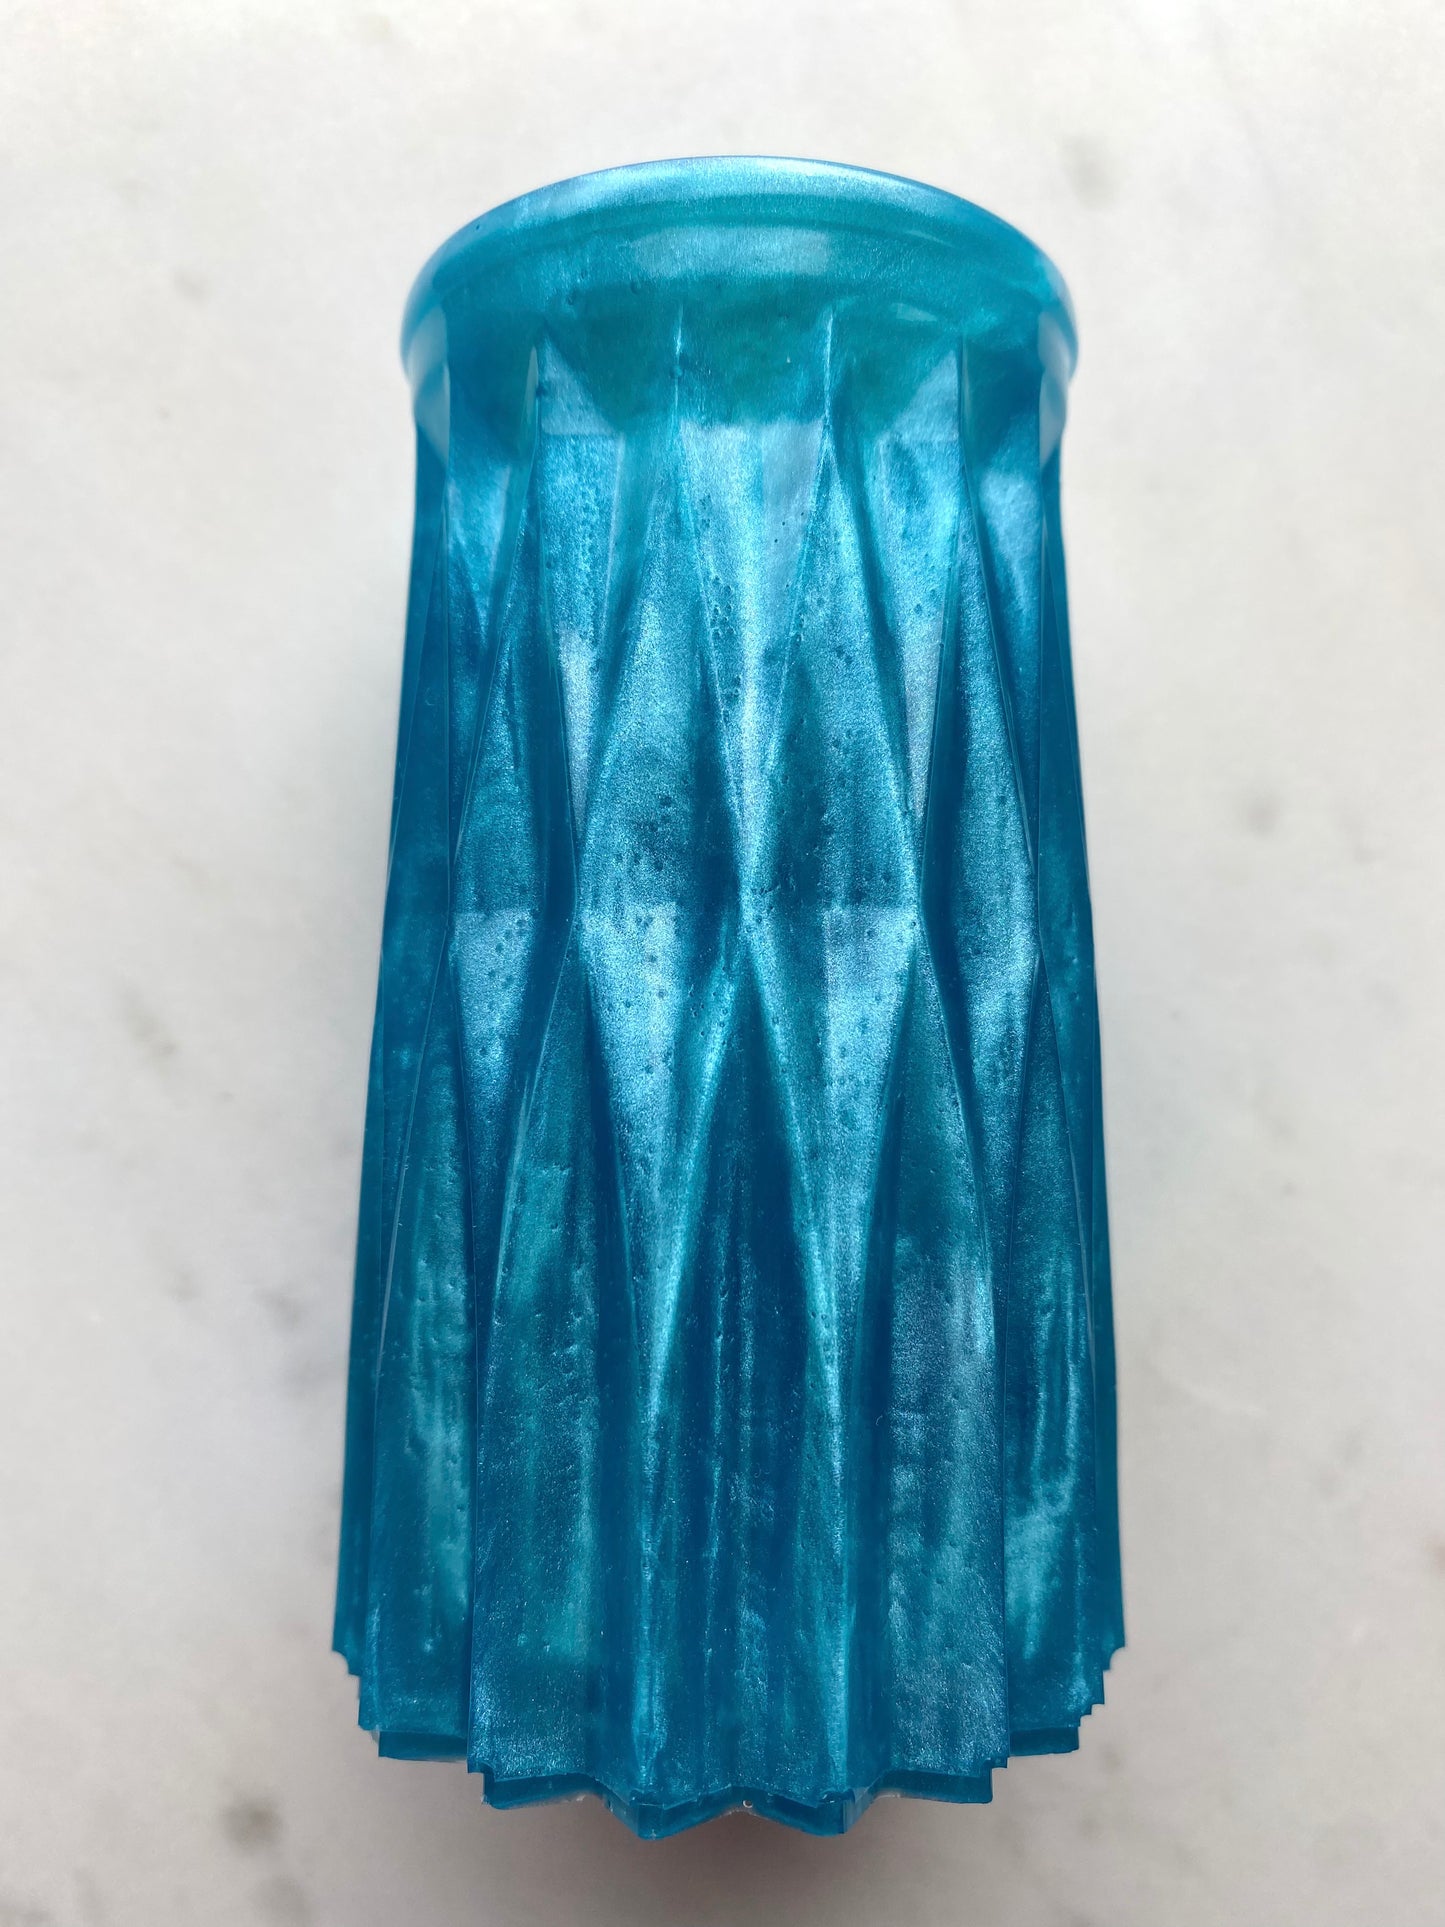 Small Bud Vase with Macramé Hanger | Blue Pearl | Handmade Home Décor